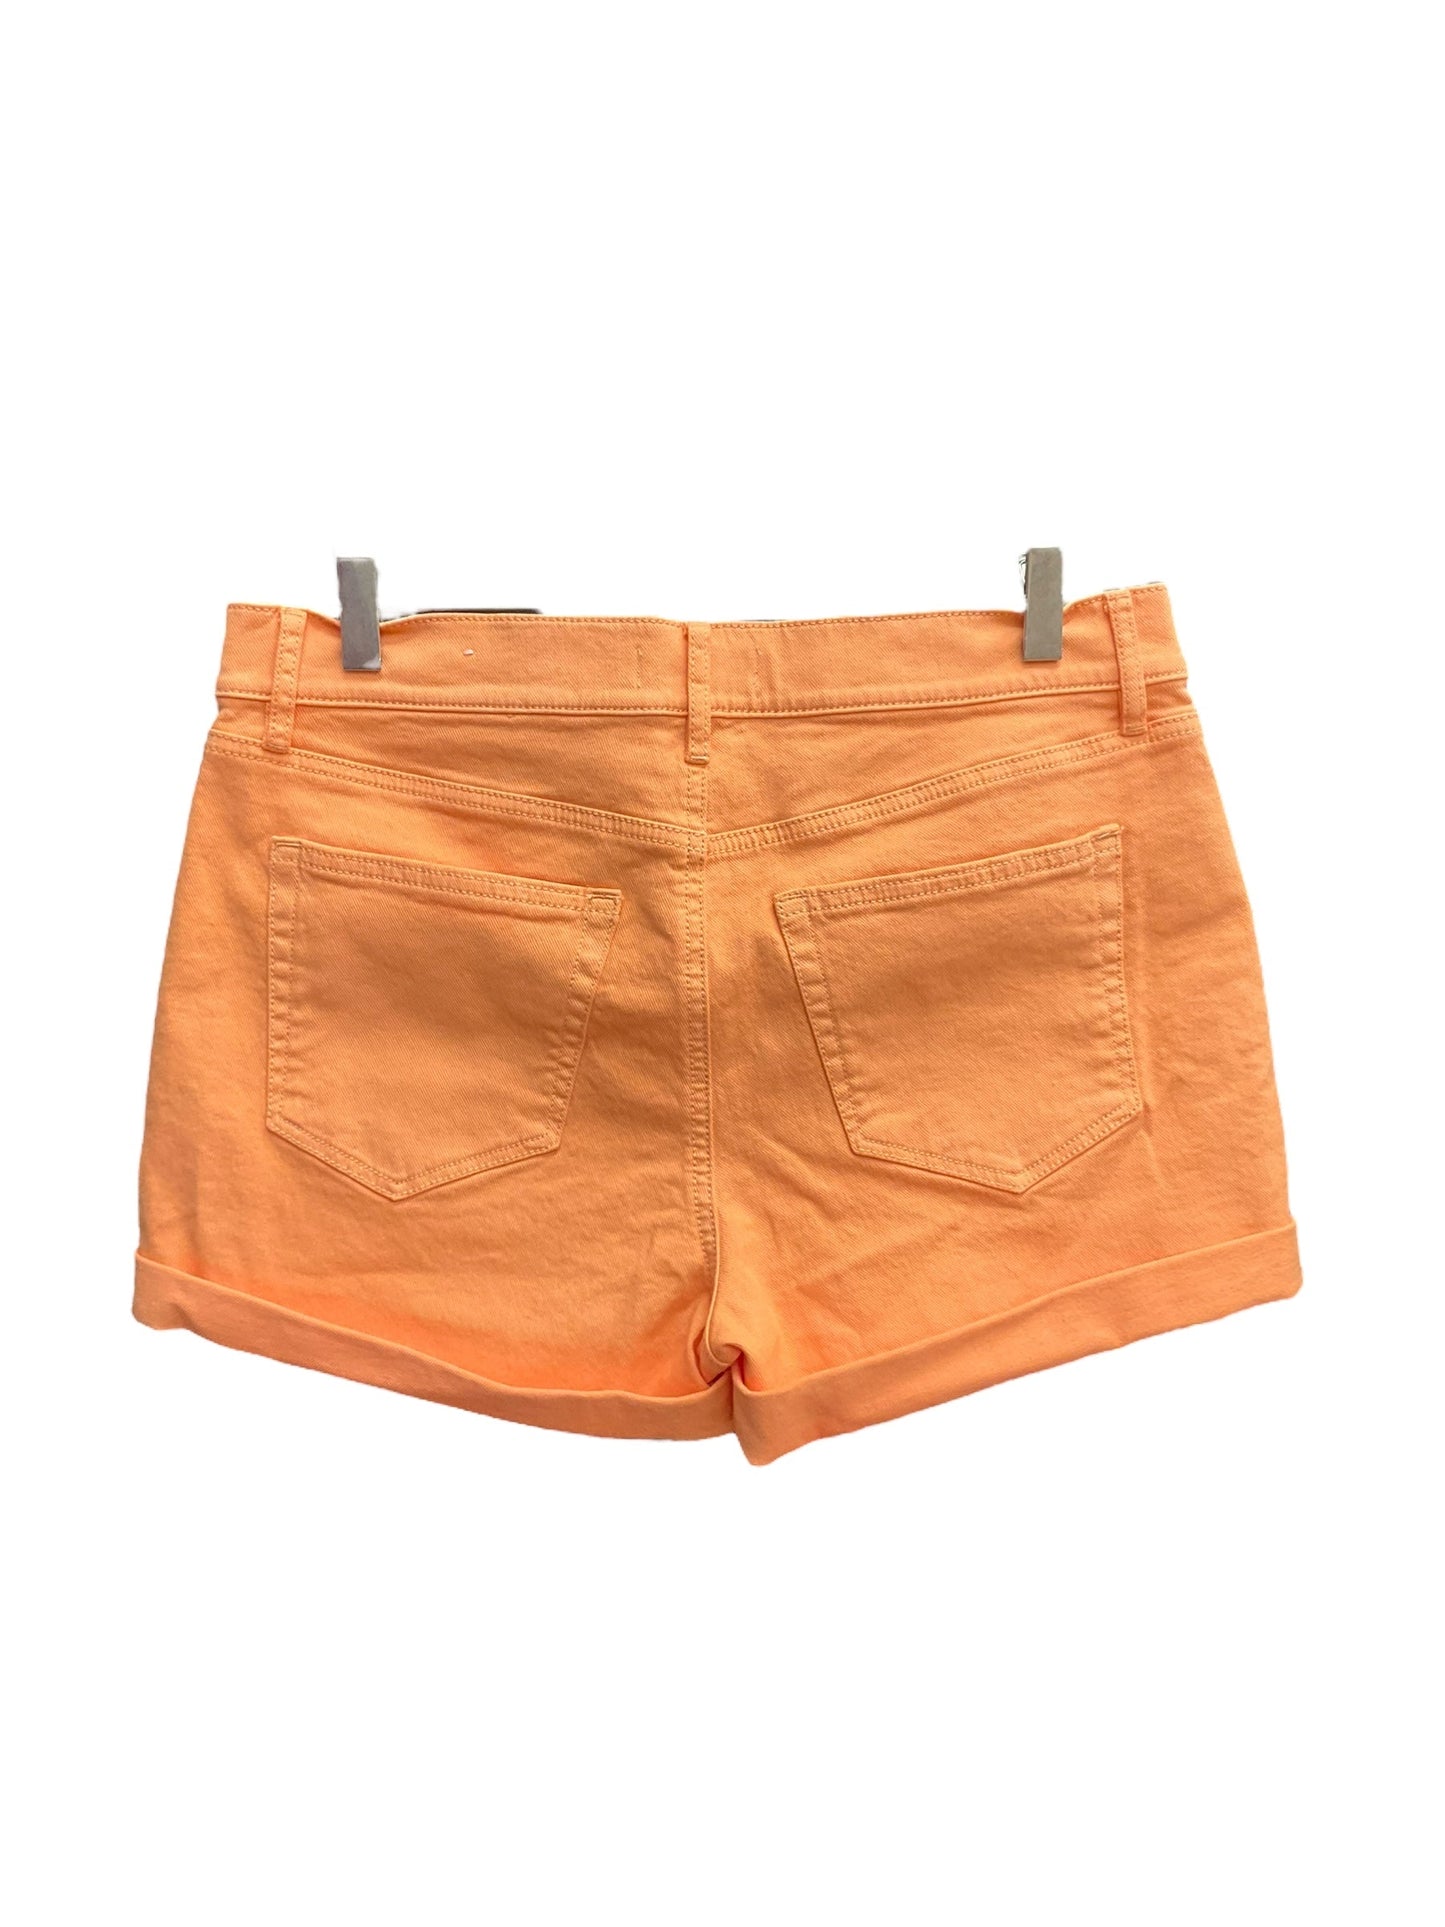 Peach Shorts Loft, Size 6